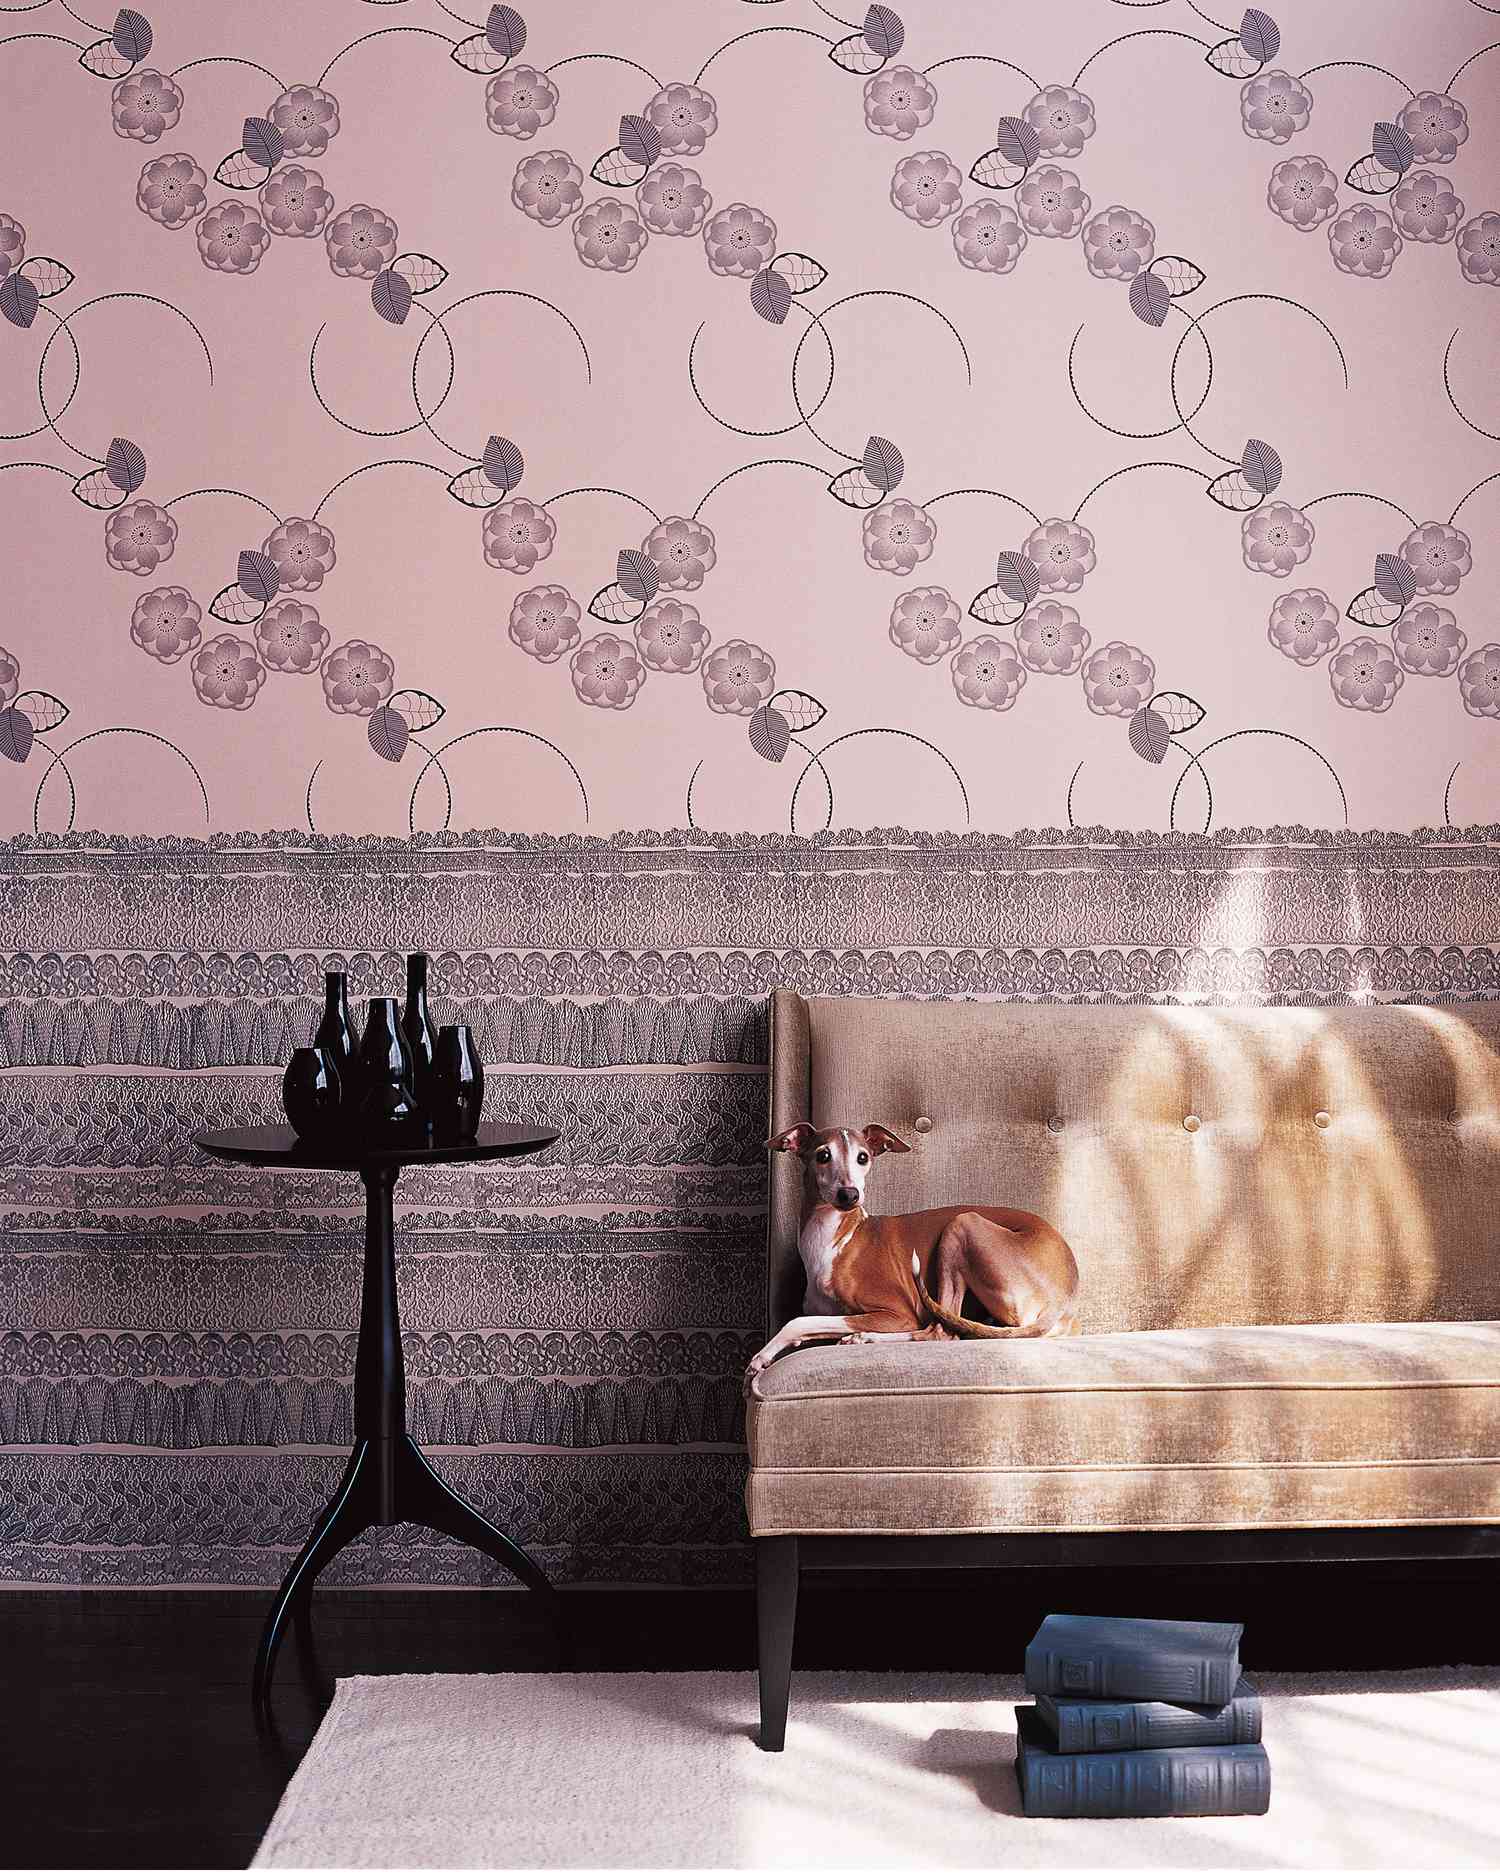 How to Hang Wallpaper | Martha Stewart